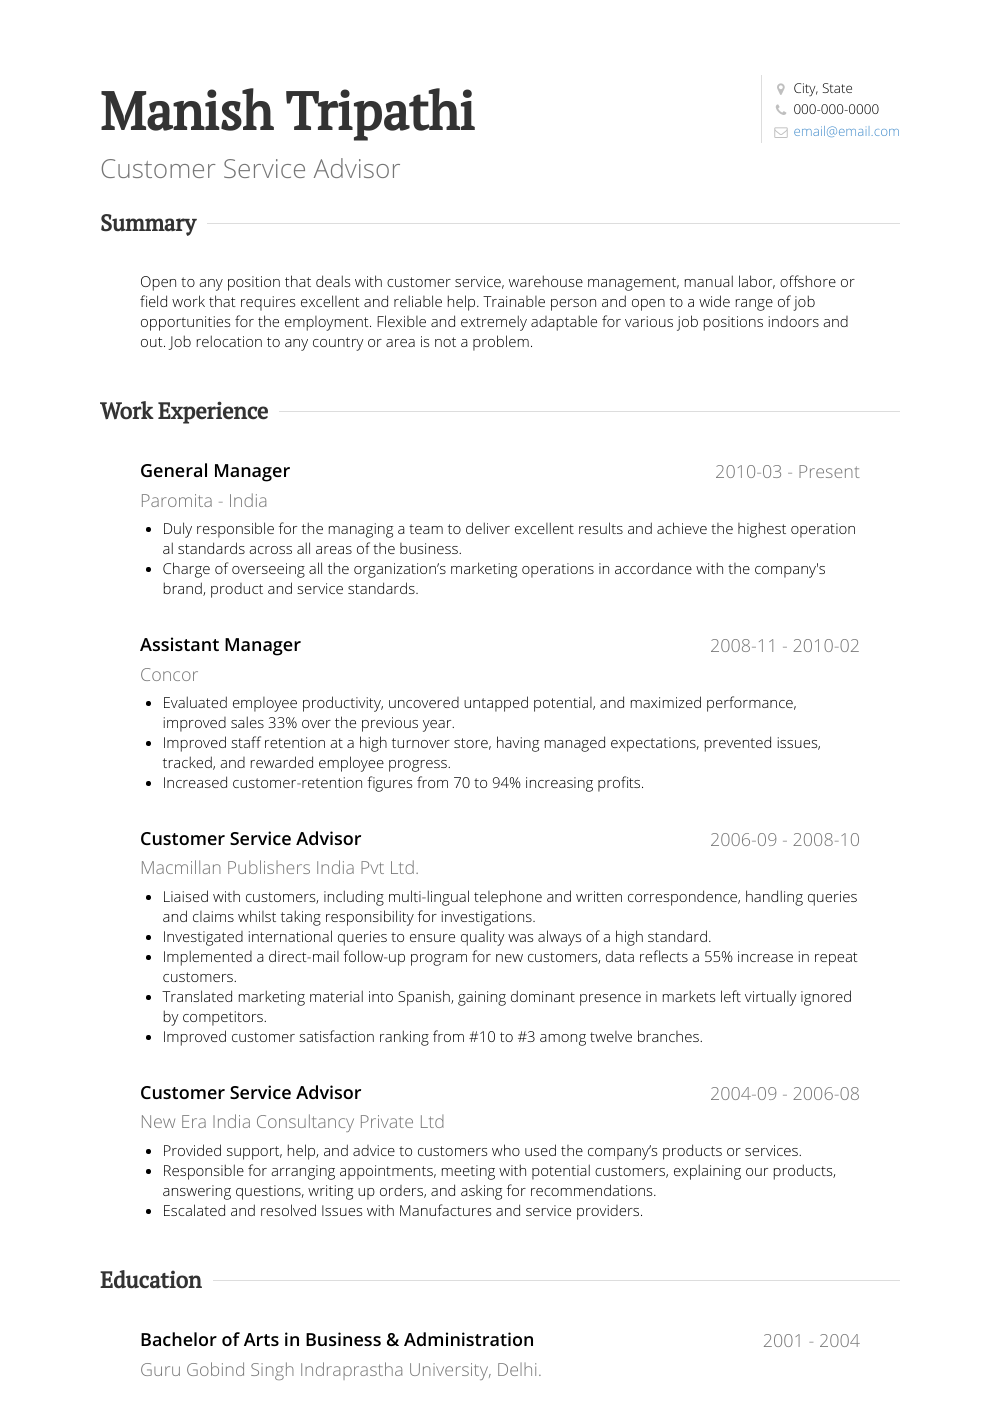 Resume For Customer Service Customer Service Adviser Standard resume for customer service|wikiresume.com